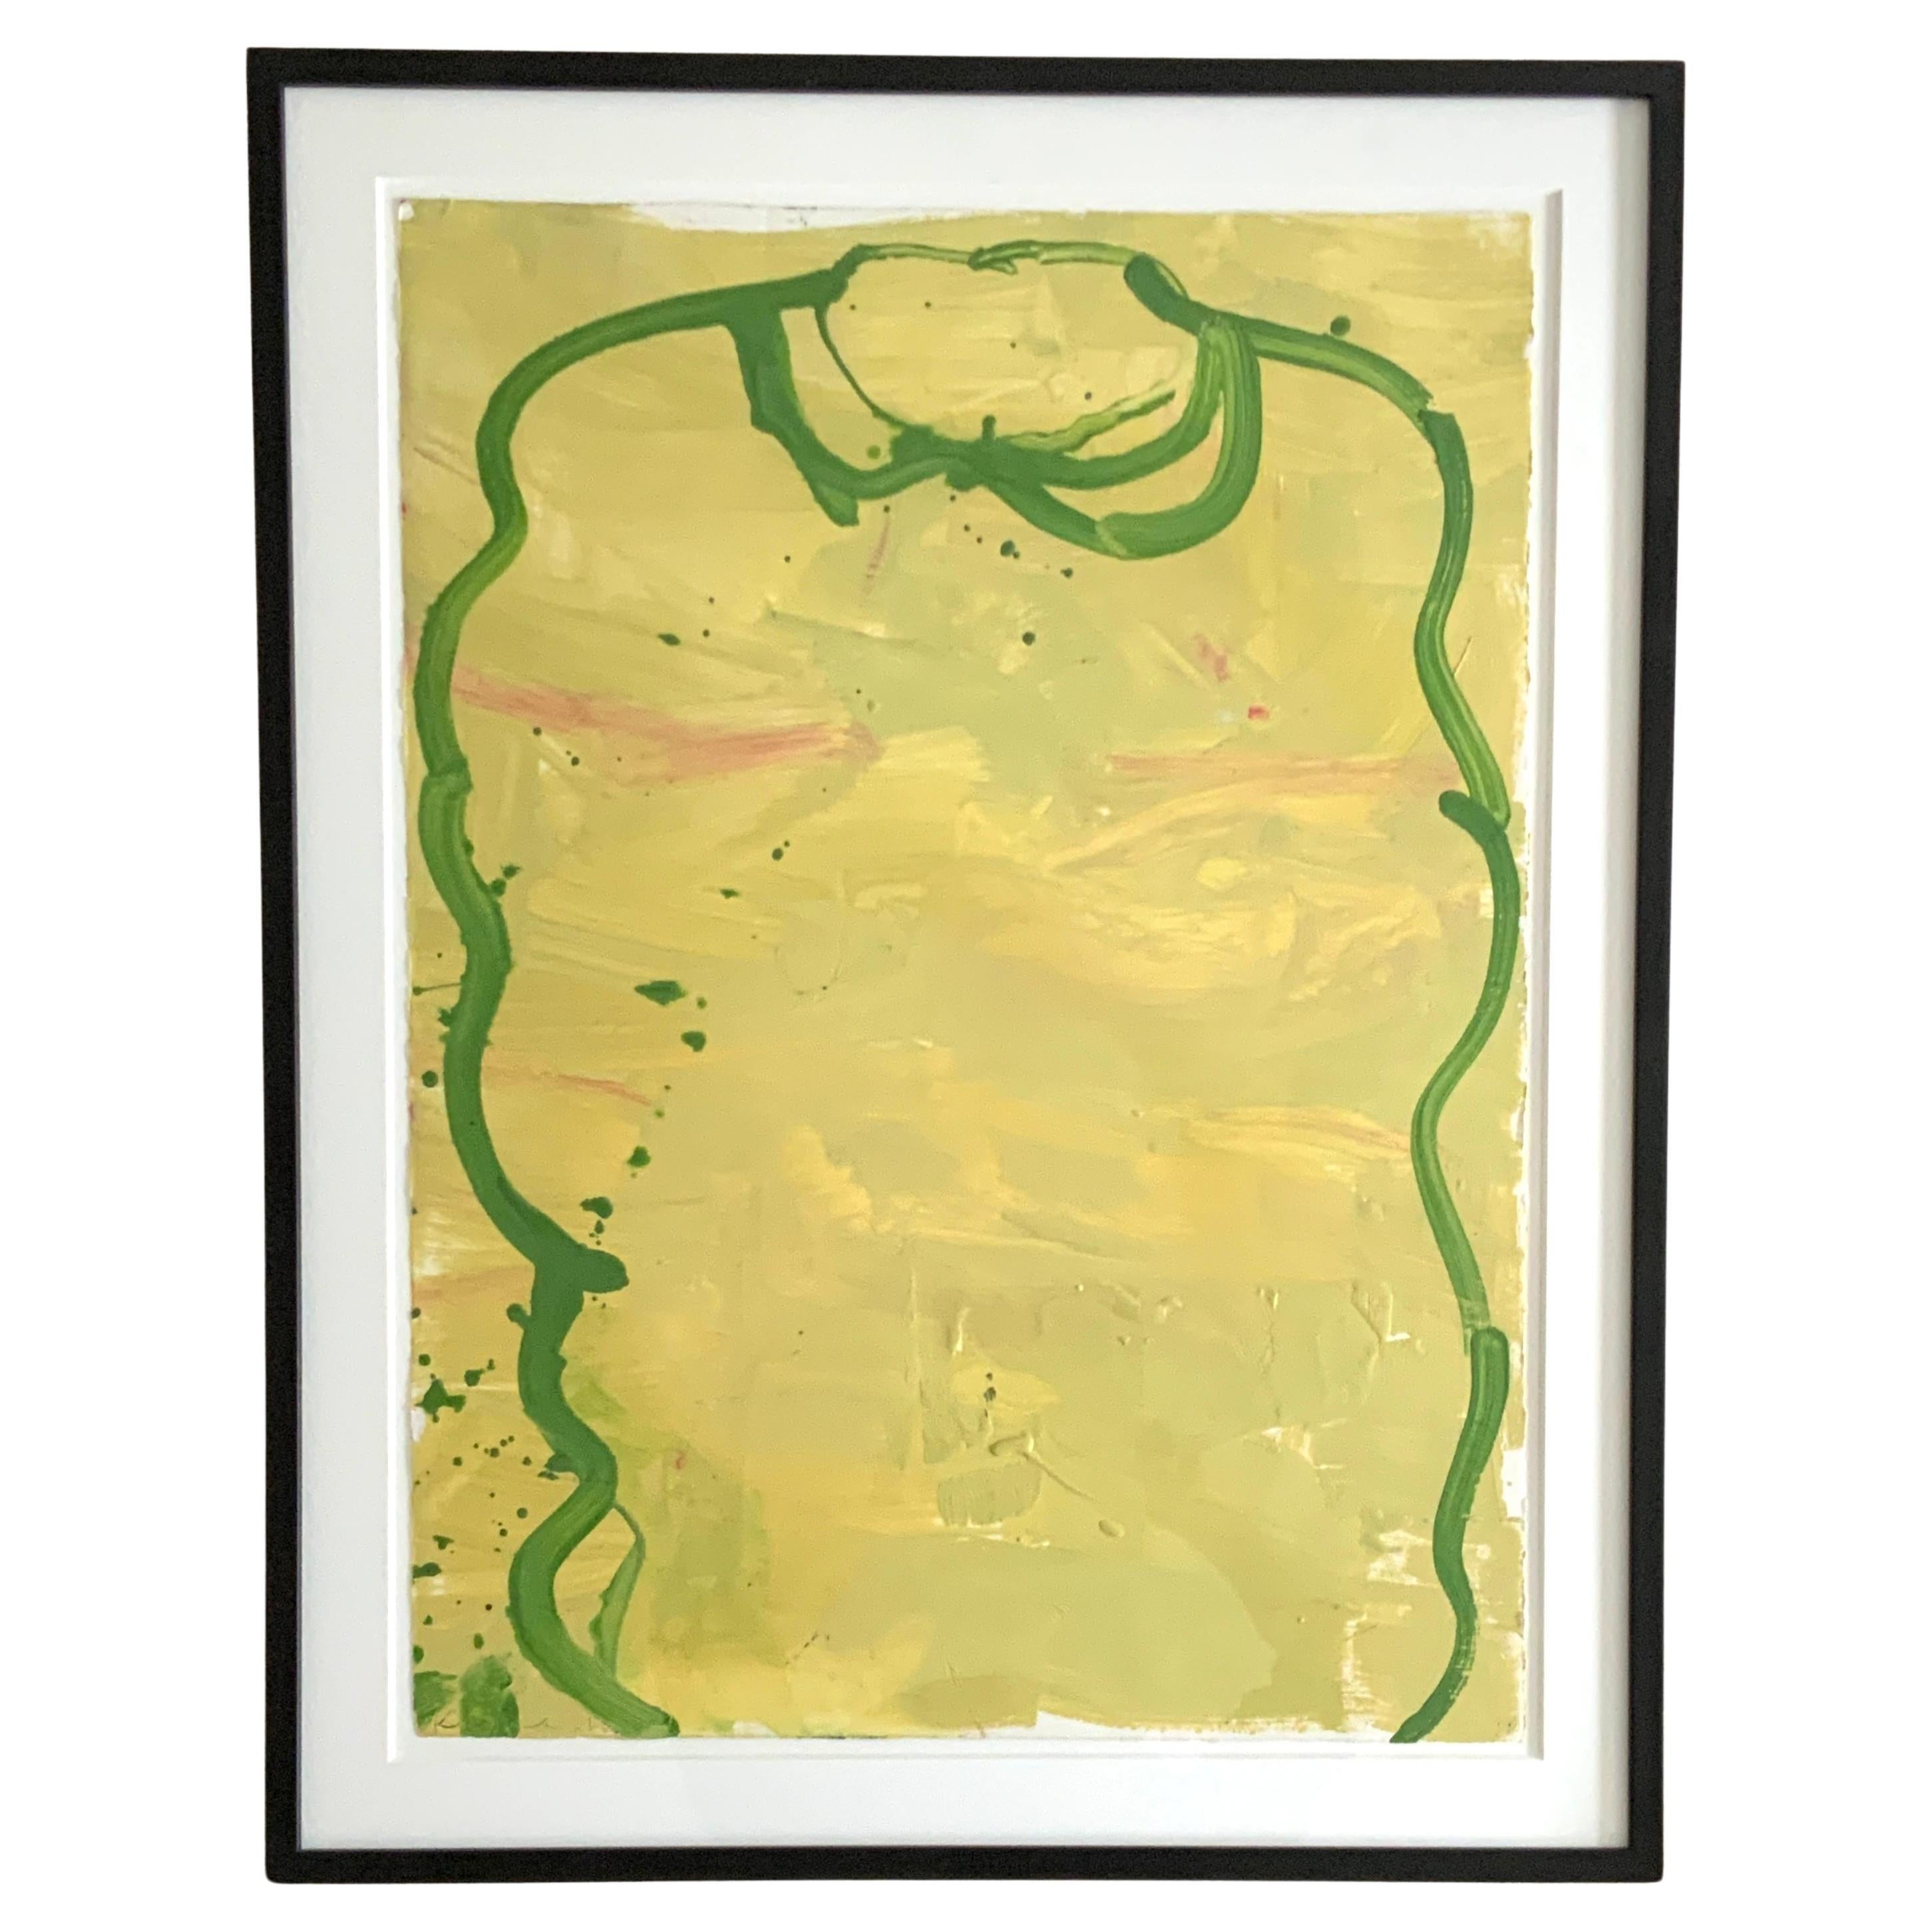 Gary Komarin Untitled Green Vessel on Yellow Green, acrylique sur papier, 2000 en vente